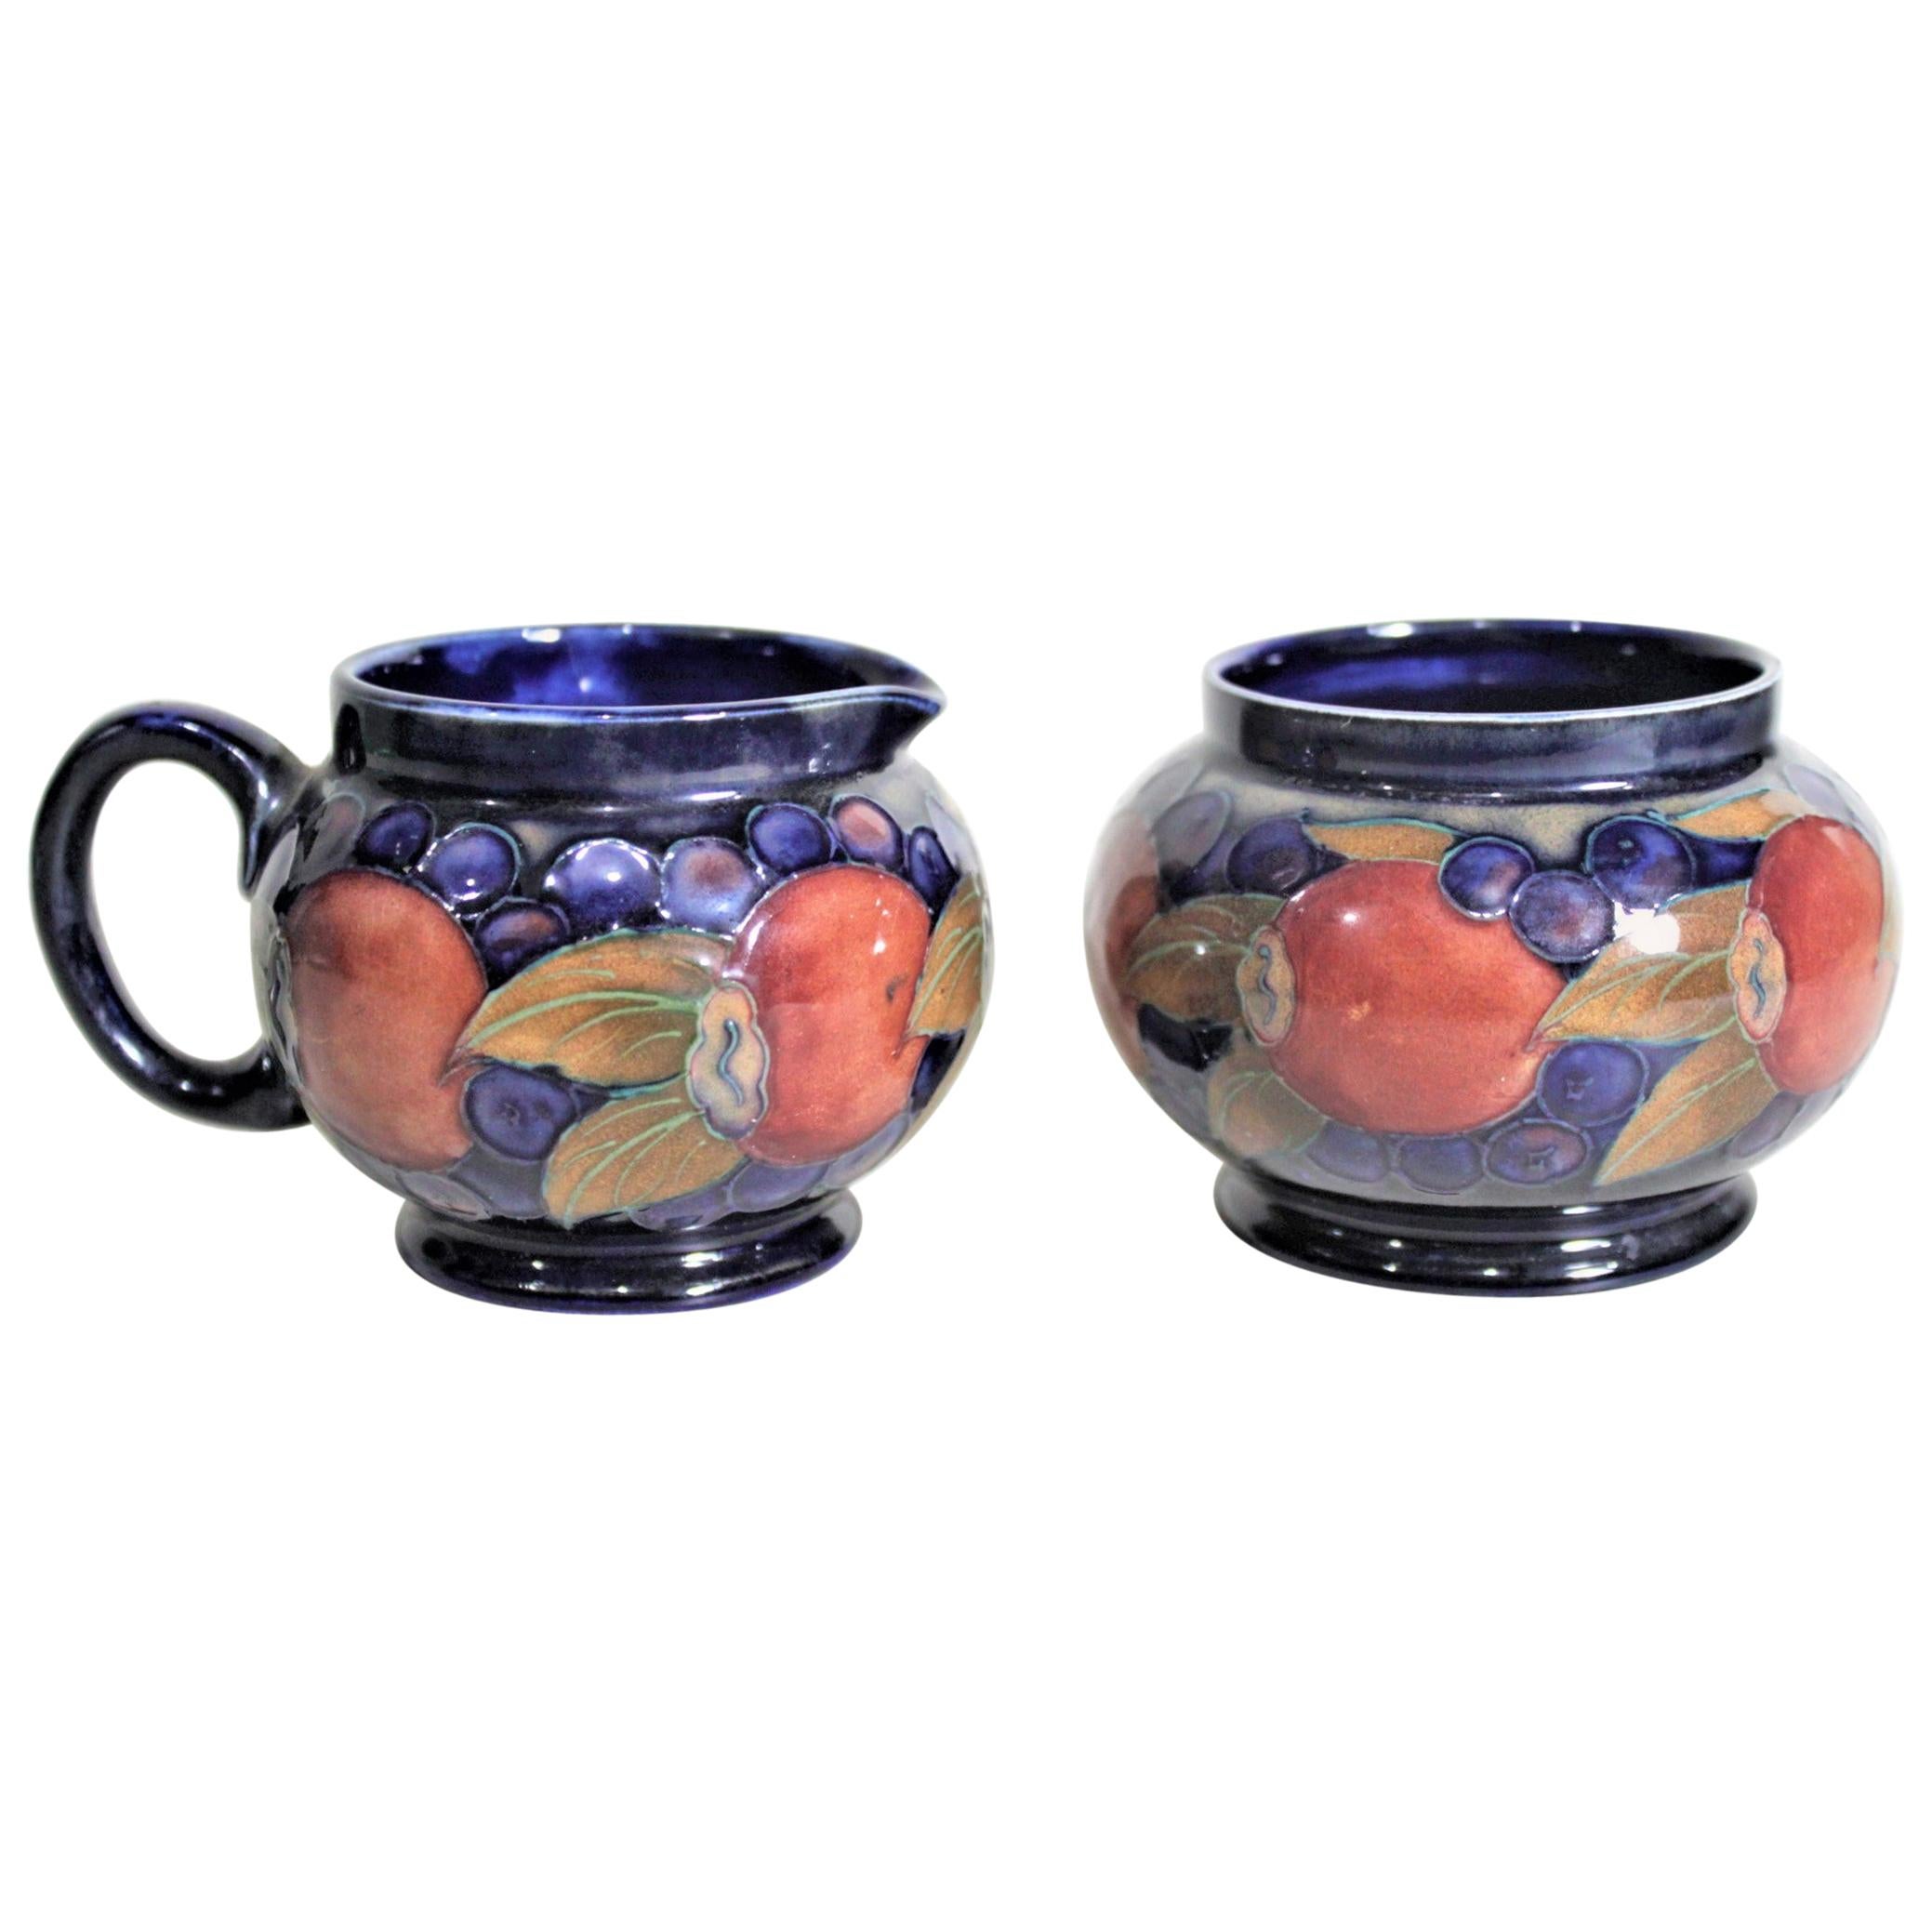 William Moorcroft Pomegranate Patterned Art Pottery Creamer and Sugar Bowl Set